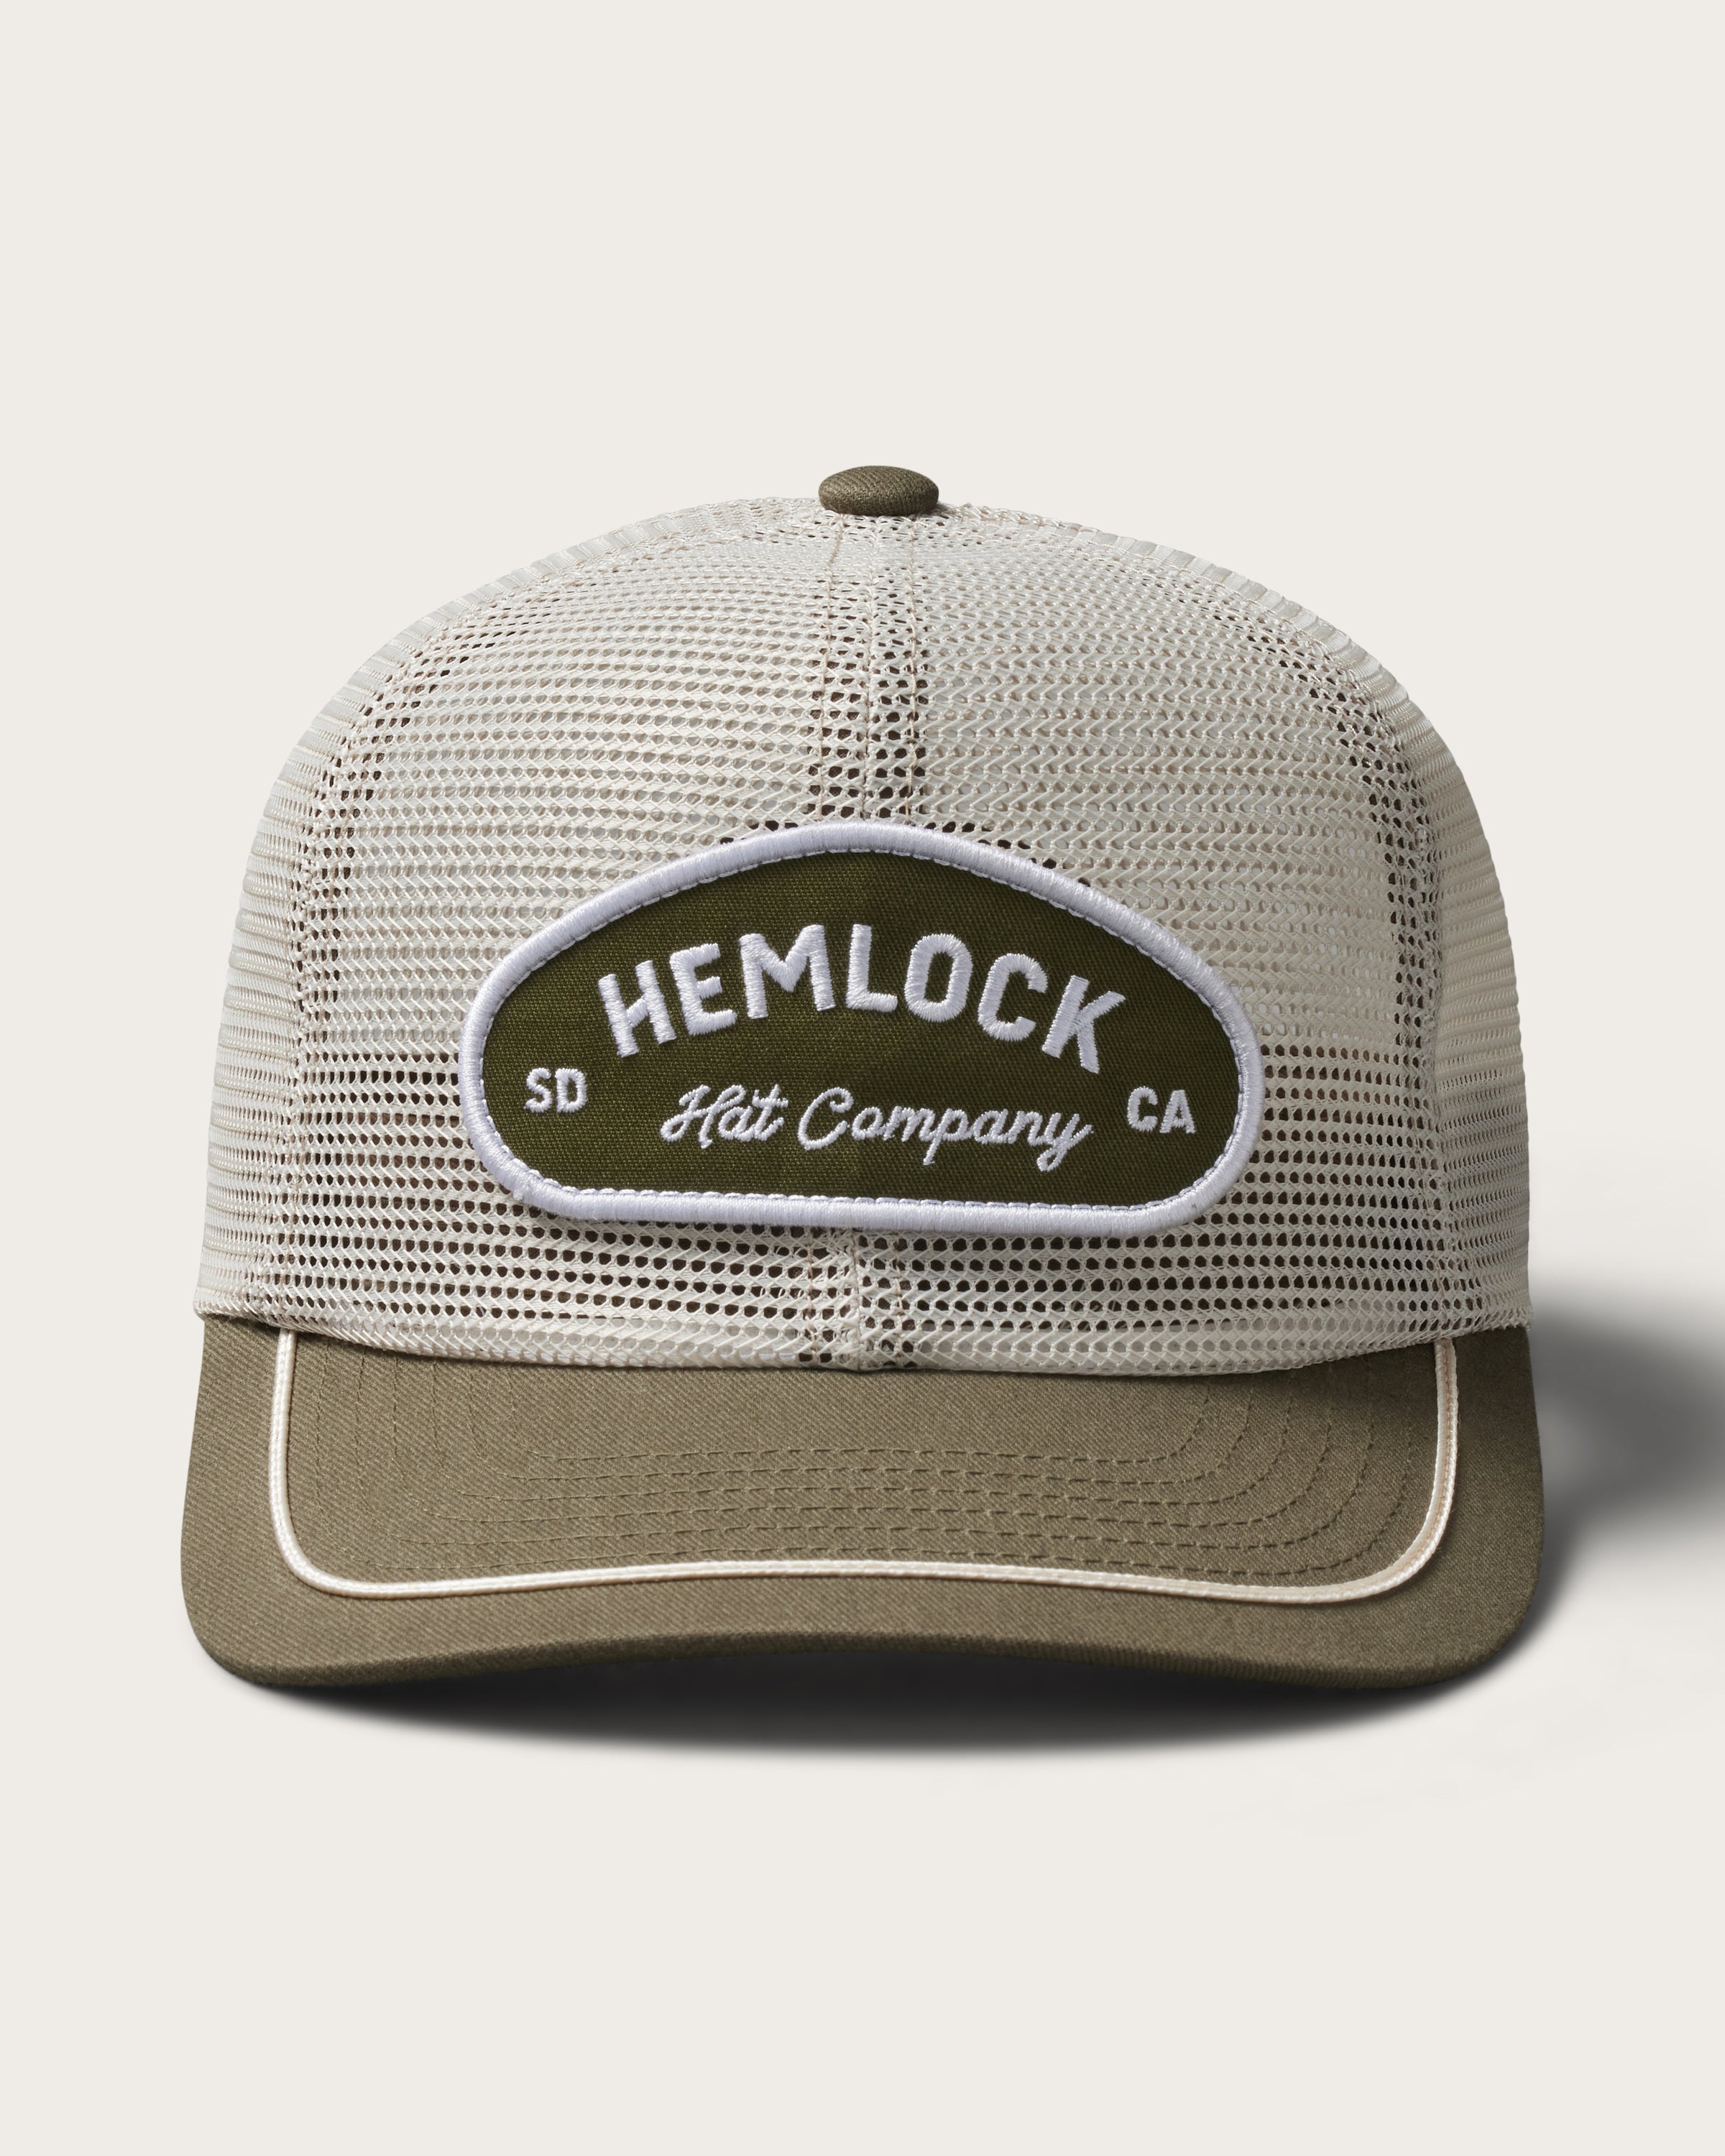 Hemlock Mack Trucker Hat in Olive detailed view